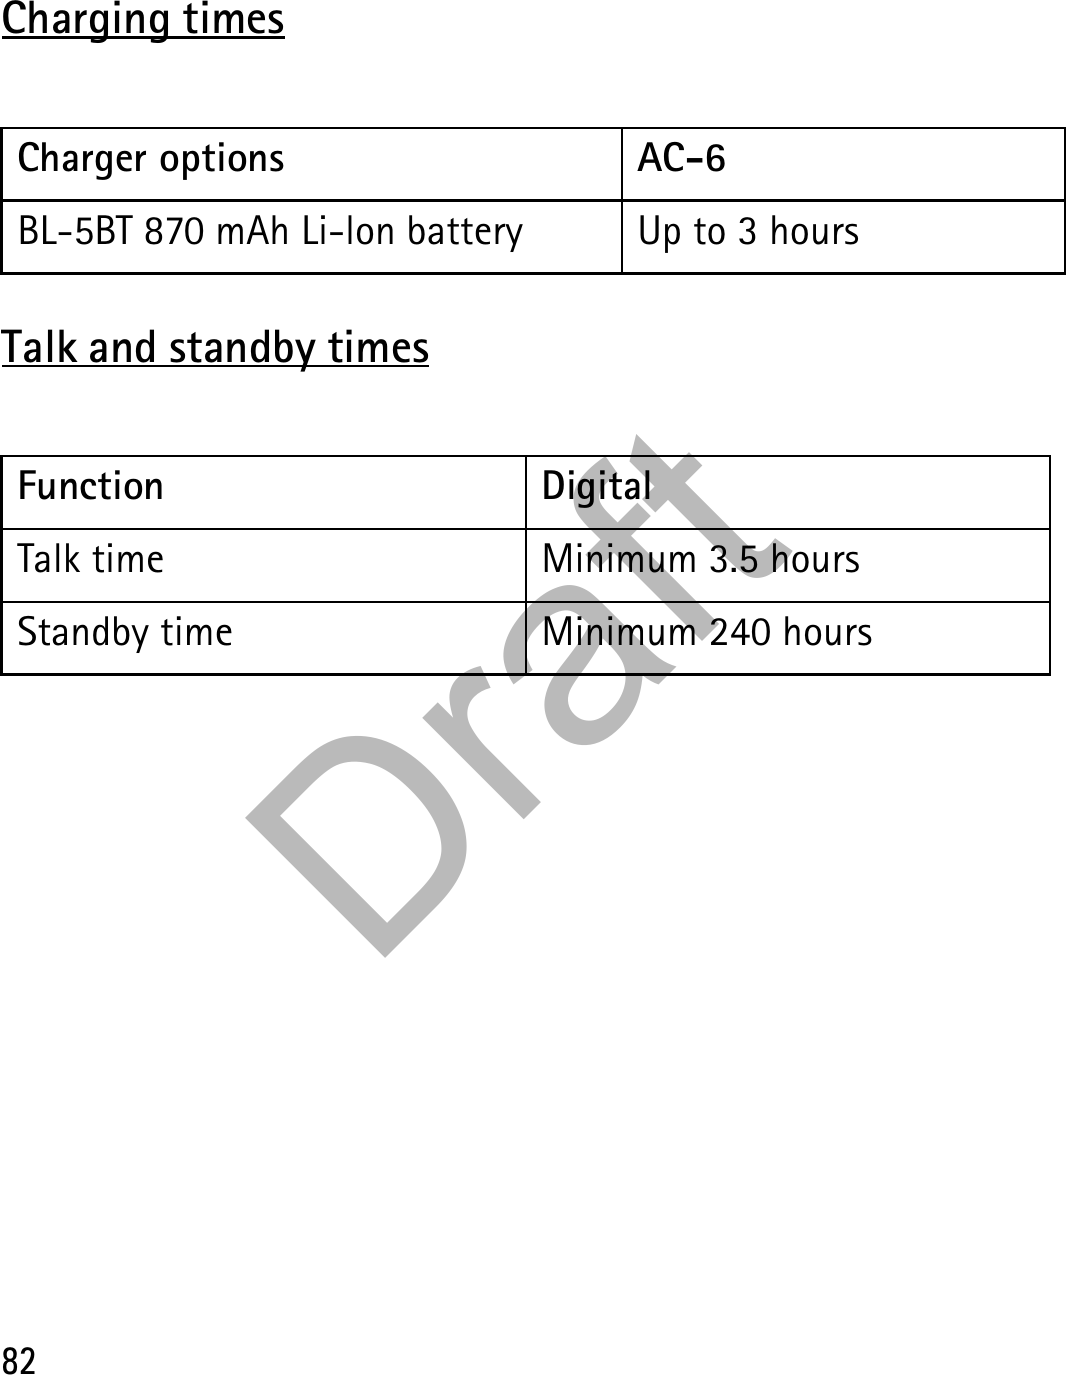 82Charging timesTalk and standby timesCharger options AC-6BL-5BT 870 mAh Li-lon battery Up to 3 hoursFunction DigitalTalk time Minimum 3.5 hoursStandby time Minimum 240 hoursDraft